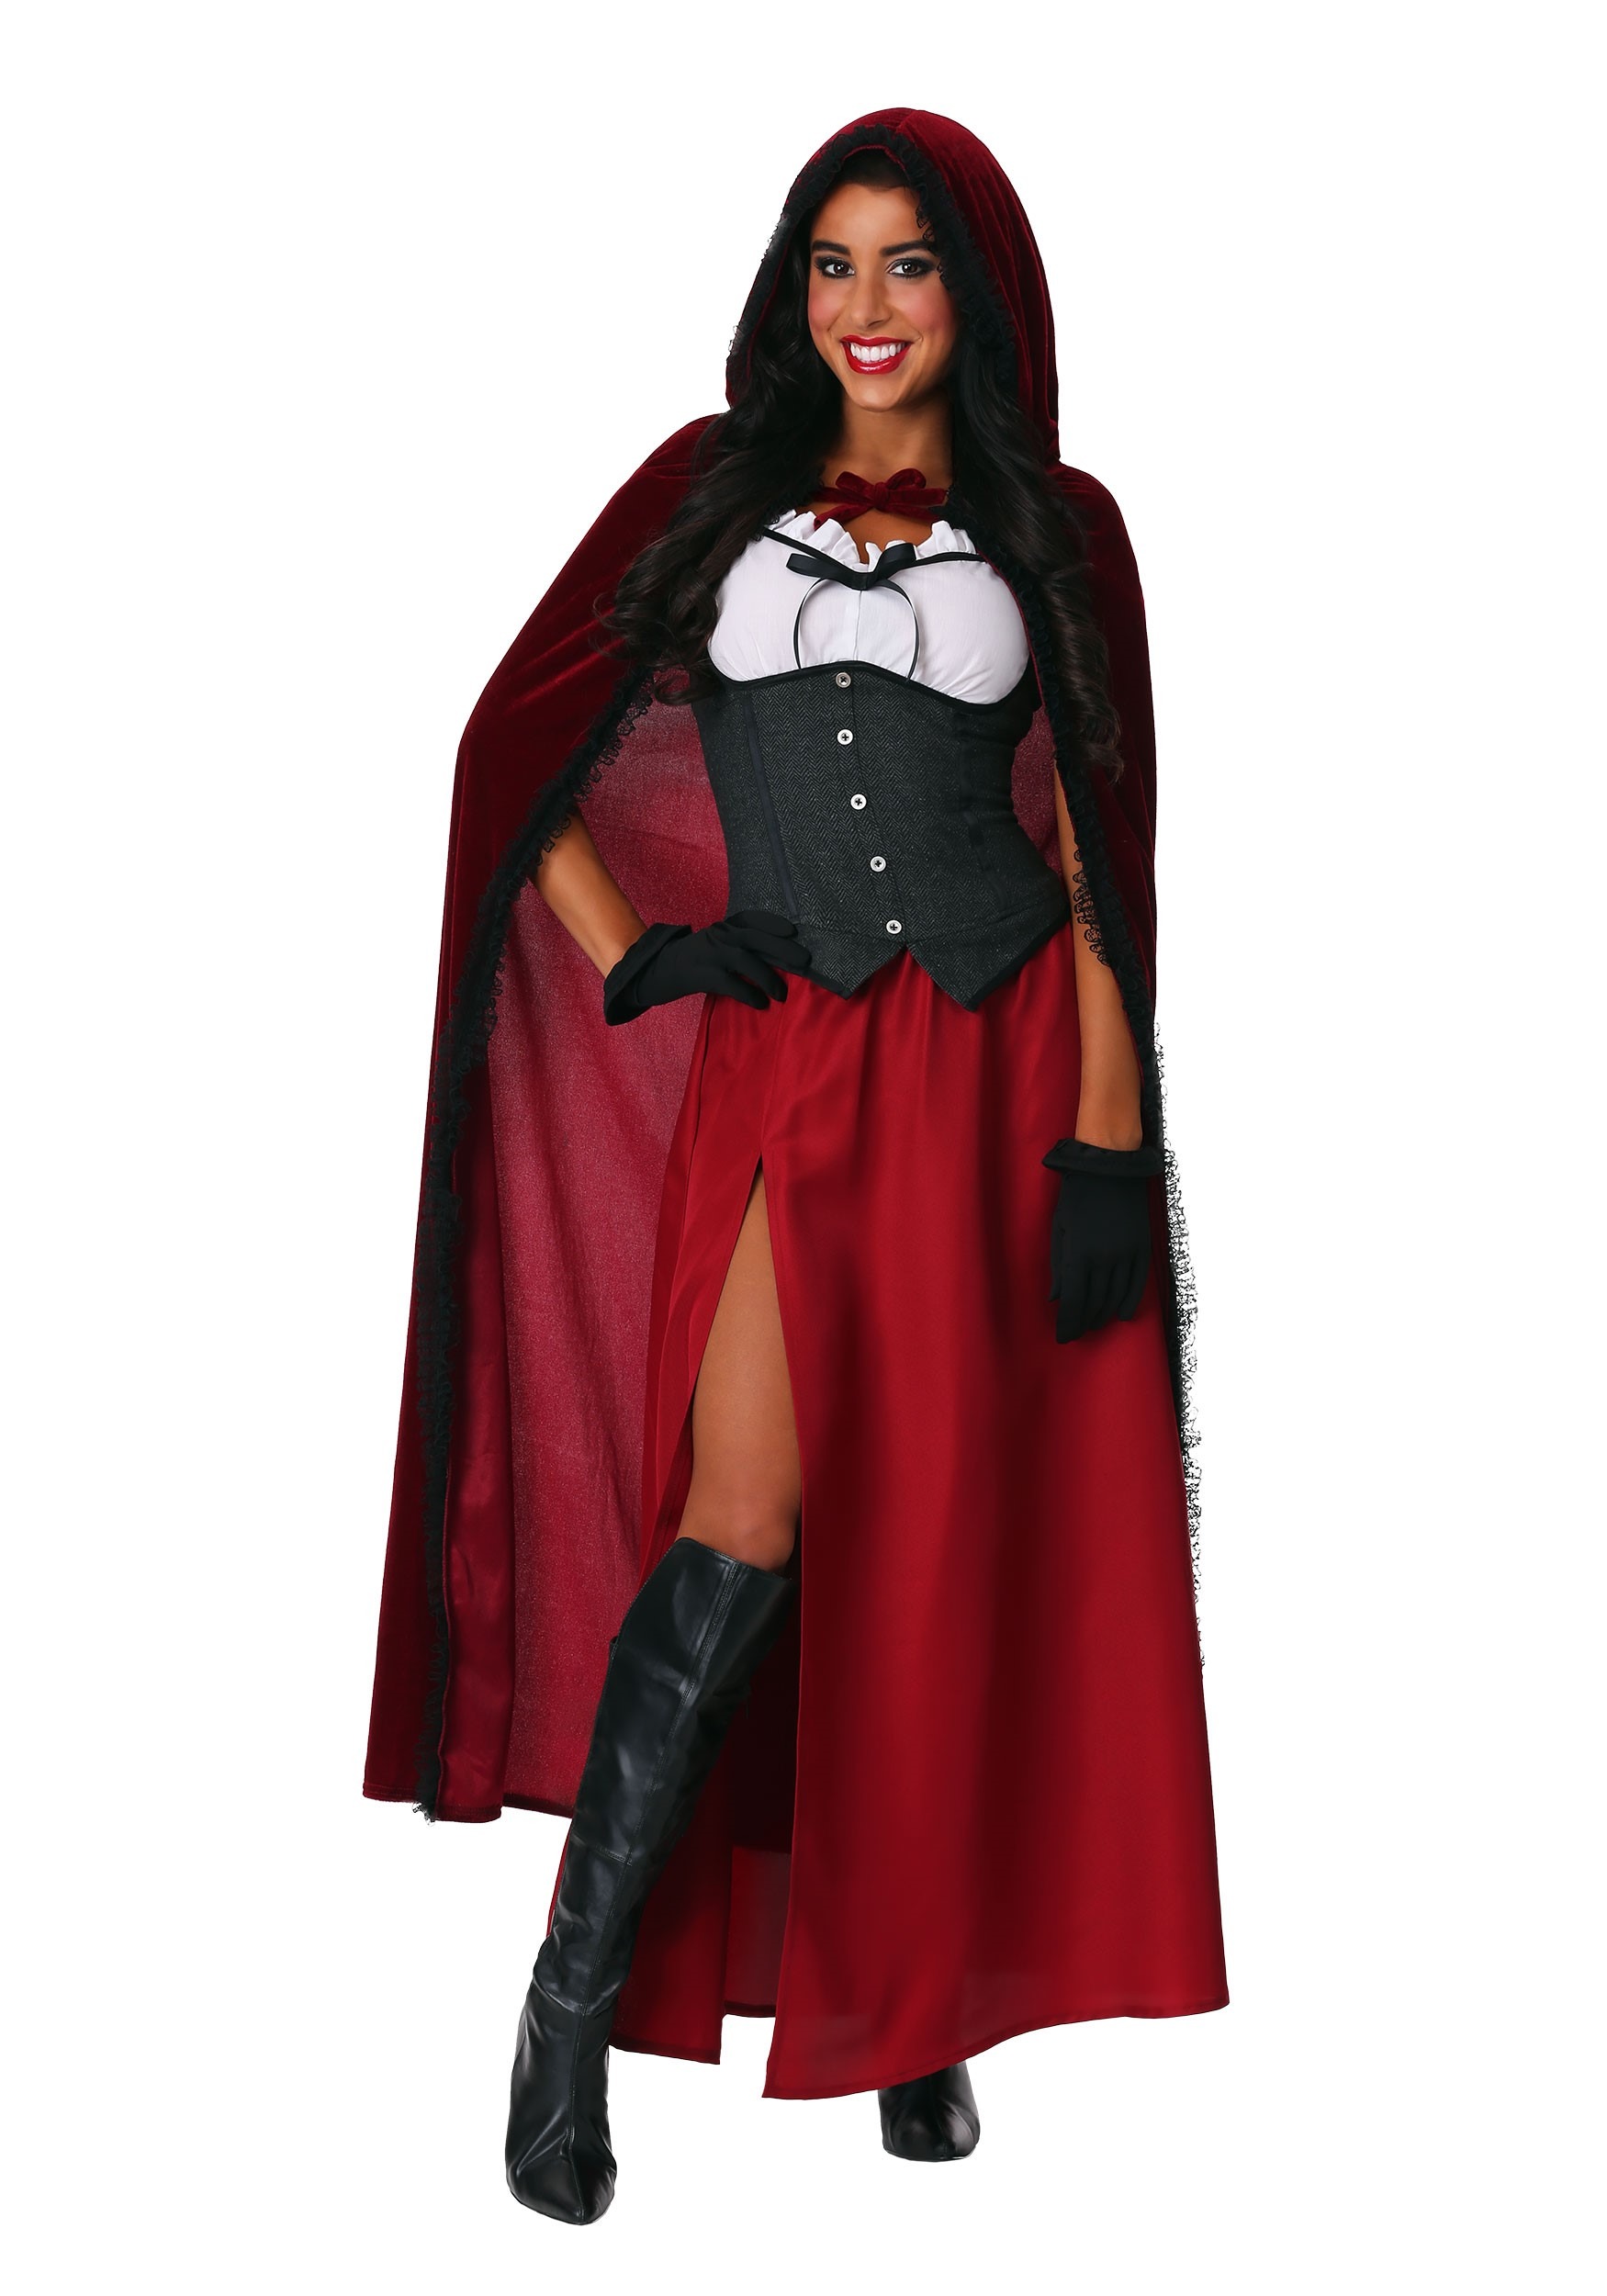 Photos - Fancy Dress FUN Costumes Plus Size Ravishing Red Riding Hood Women's Costume Red/G